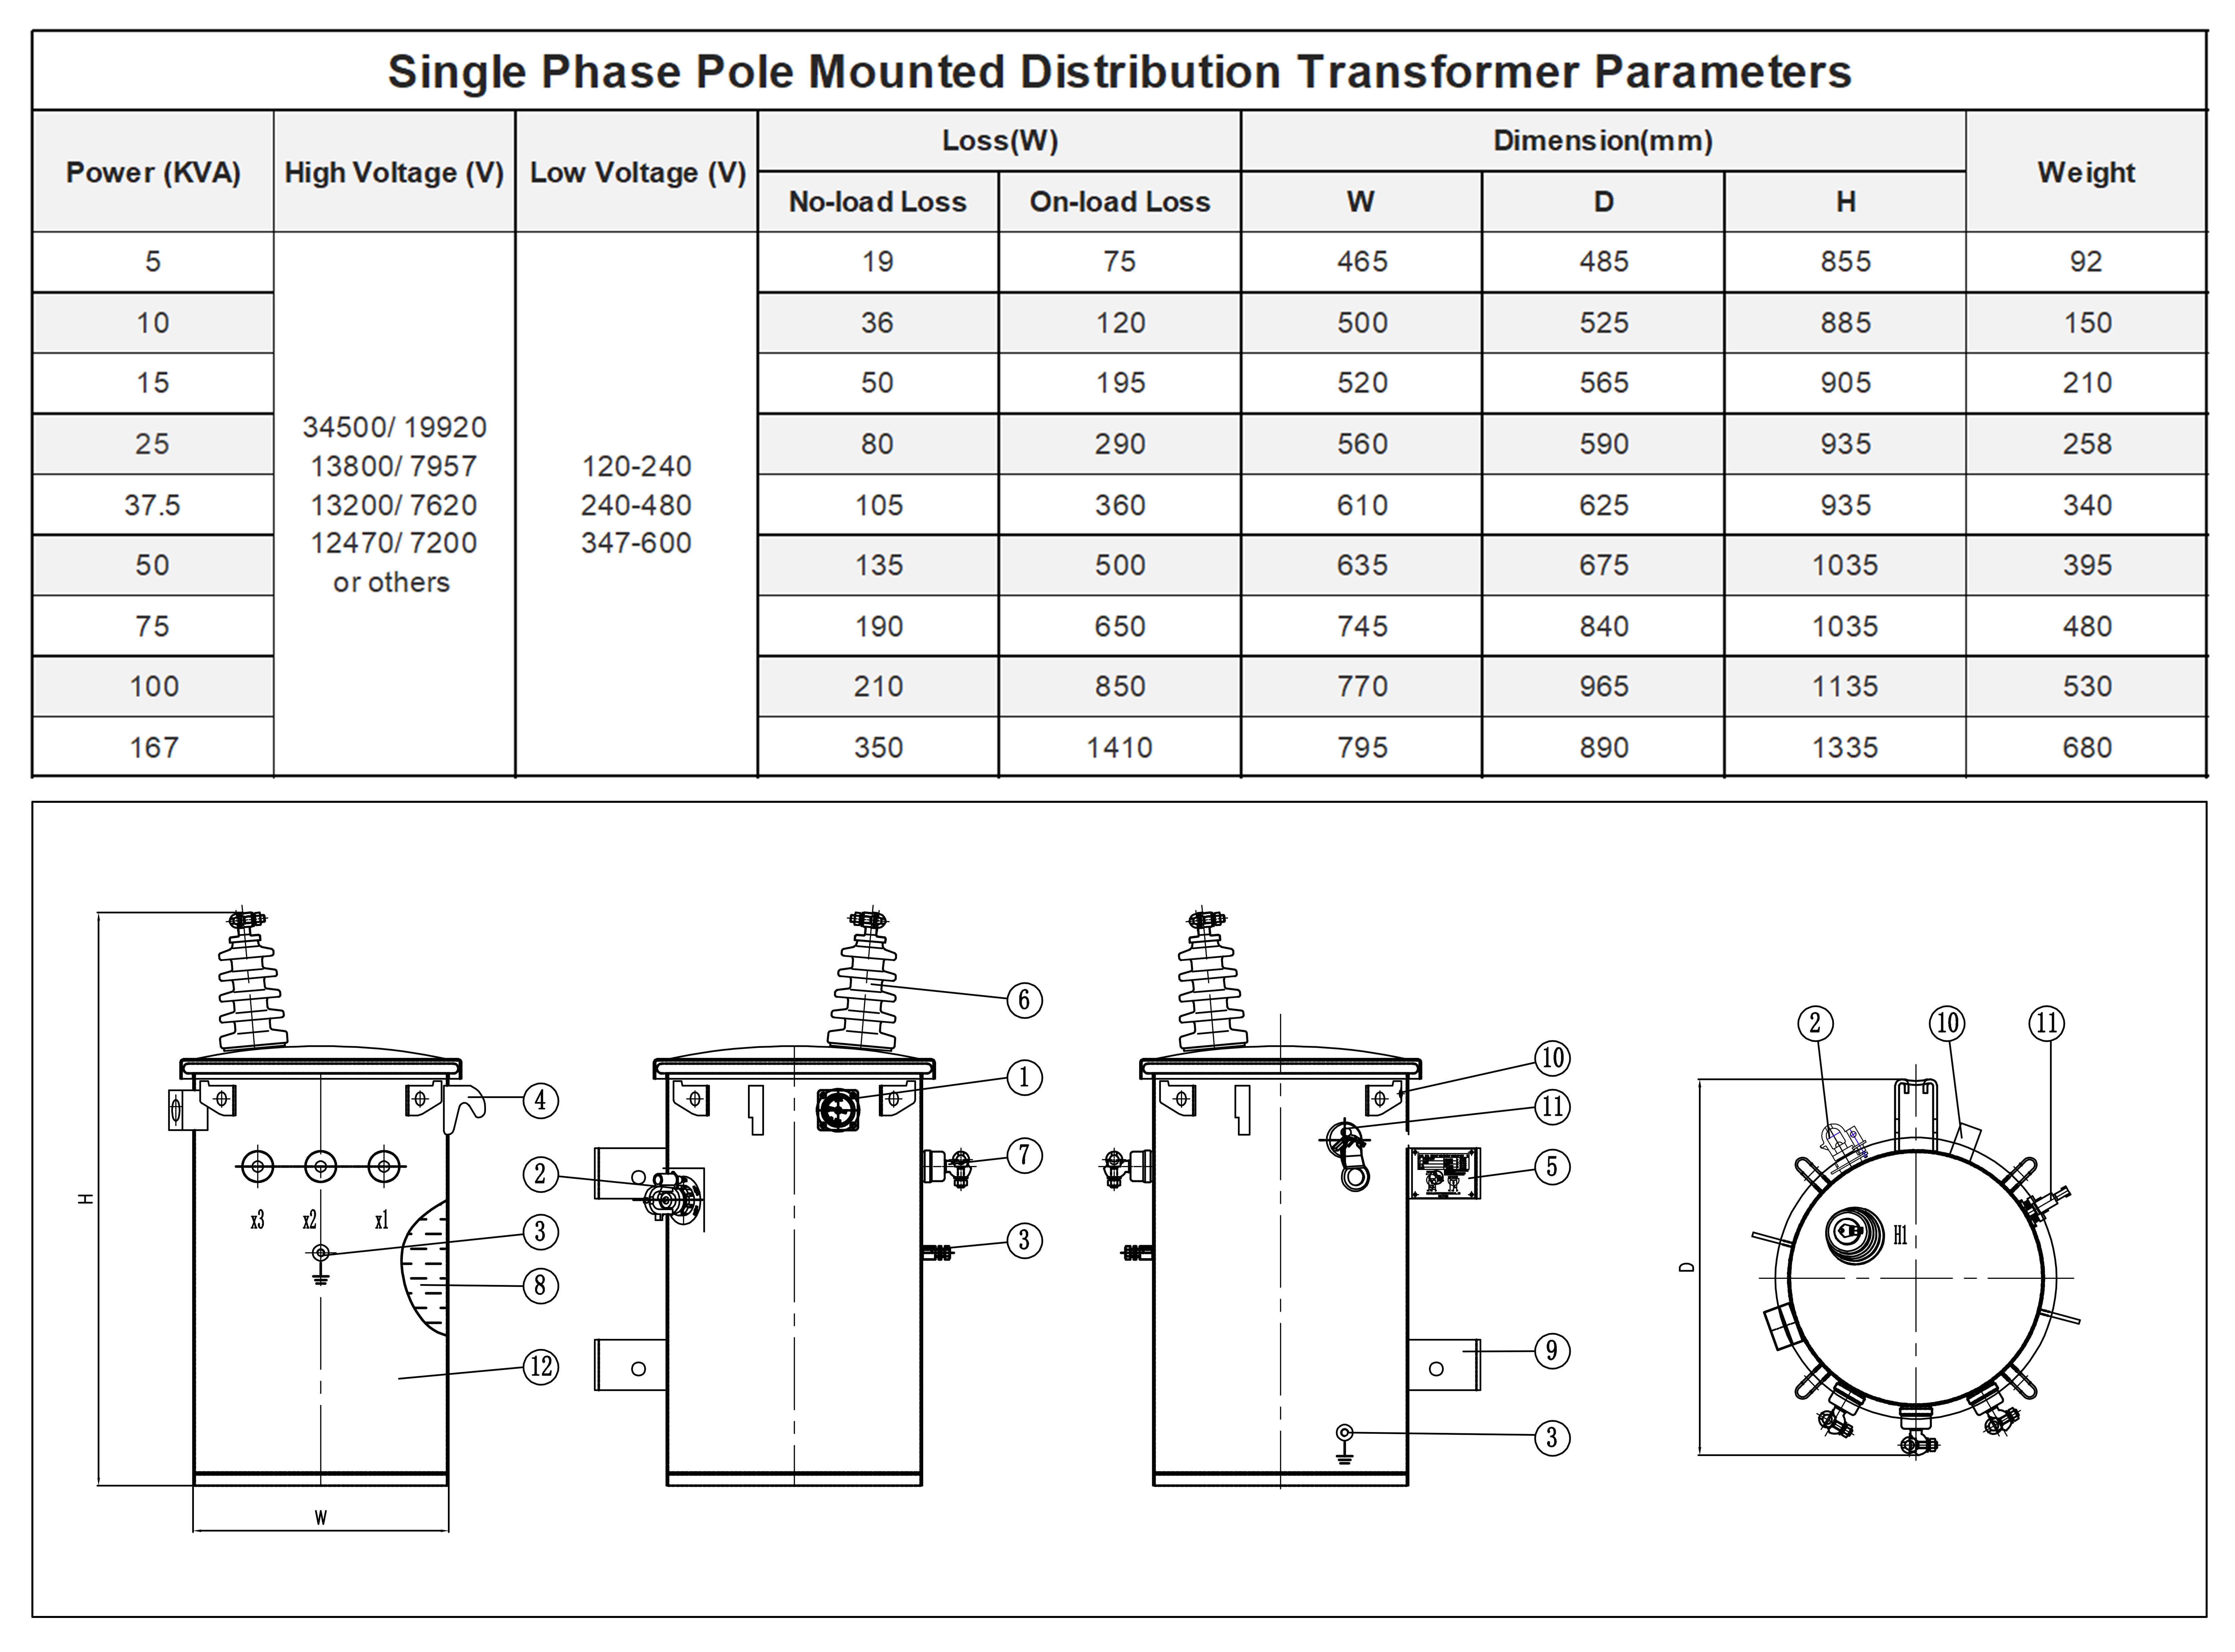 37.5kVA Single Phase Pole Mounted Distribution Transformer